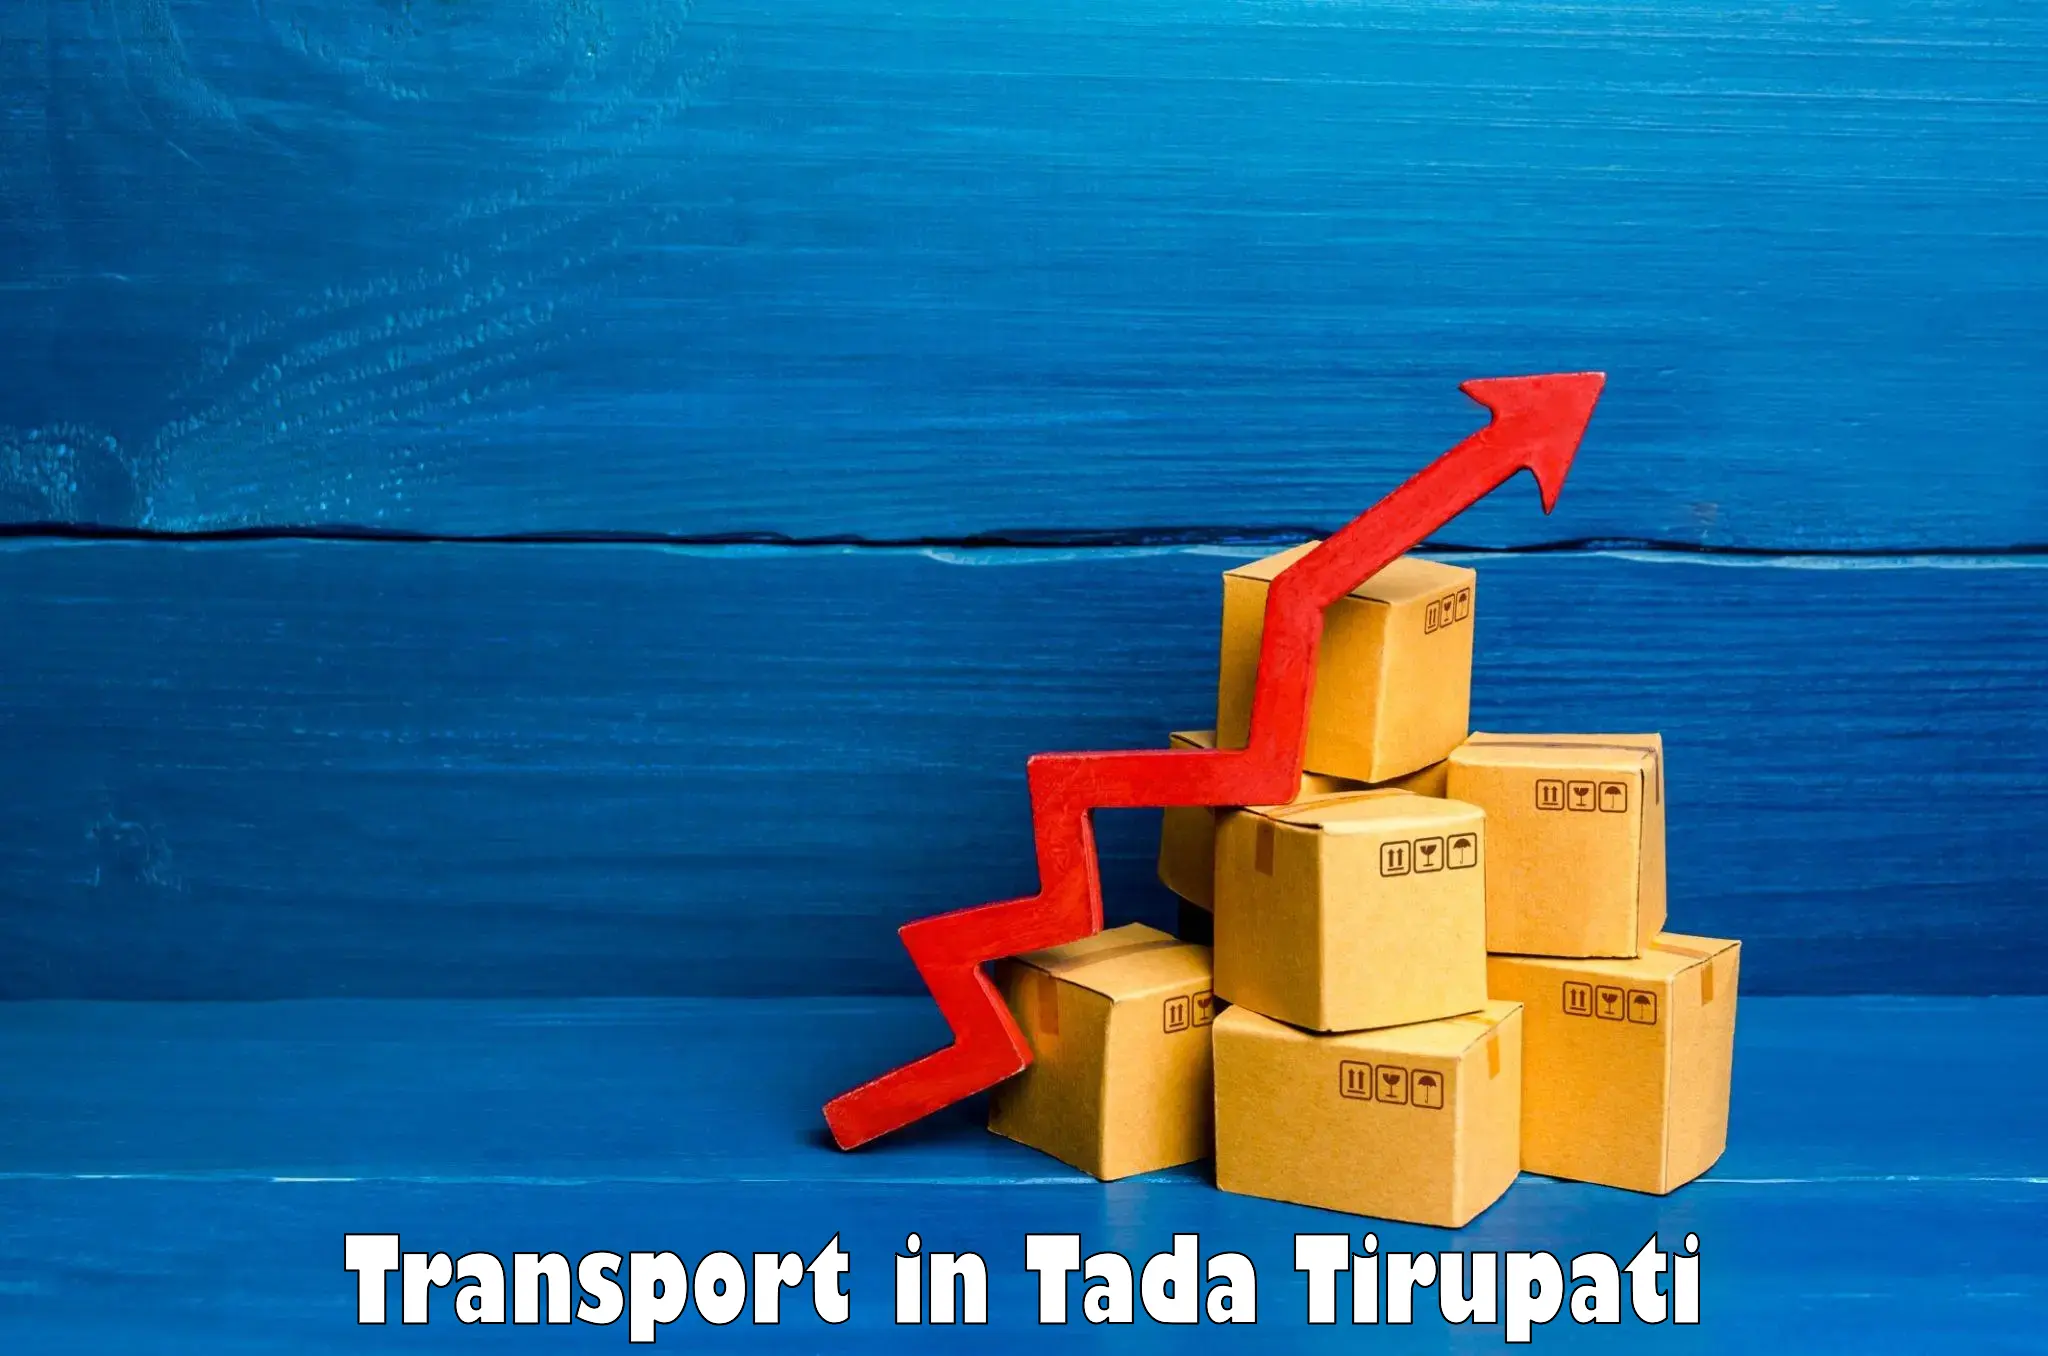 Intercity transport in Tada Tirupati